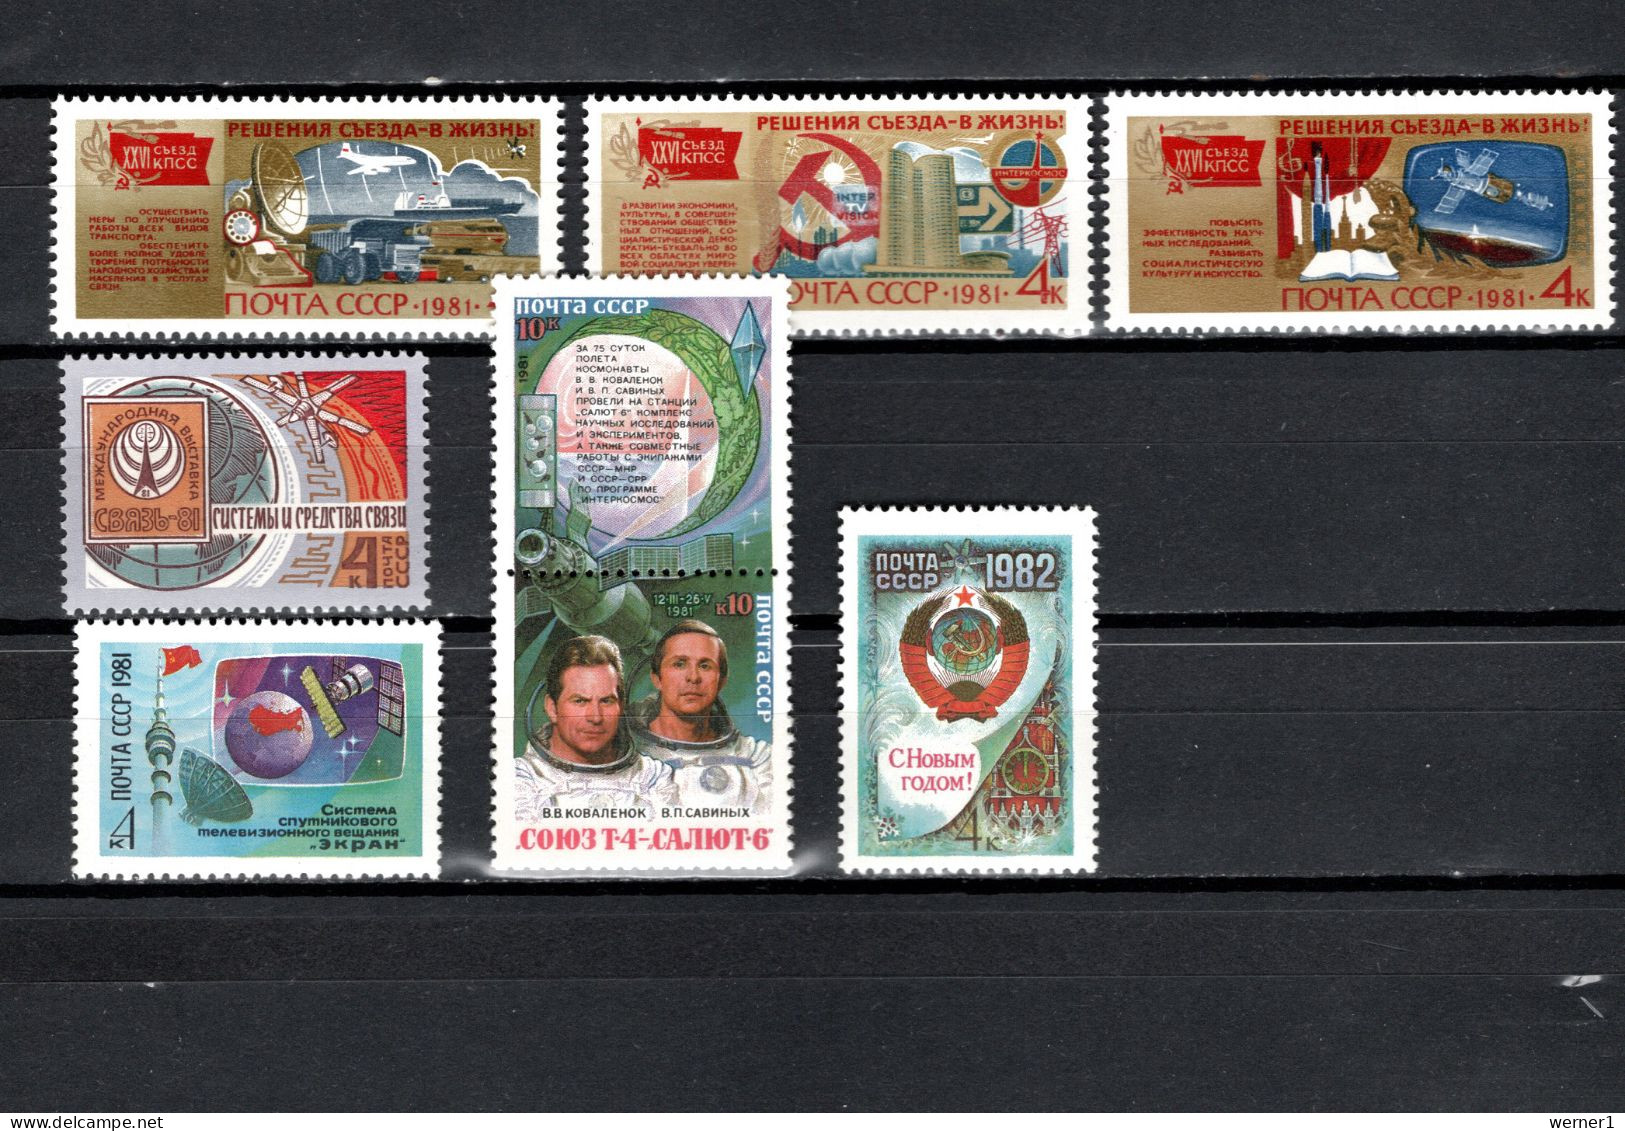 USSR Russia 1981 Space, Communist Party Congress, SWJAS '81, Ekran Satellite, Saljut 6, New Year 8 Stamps MNH - Russie & URSS